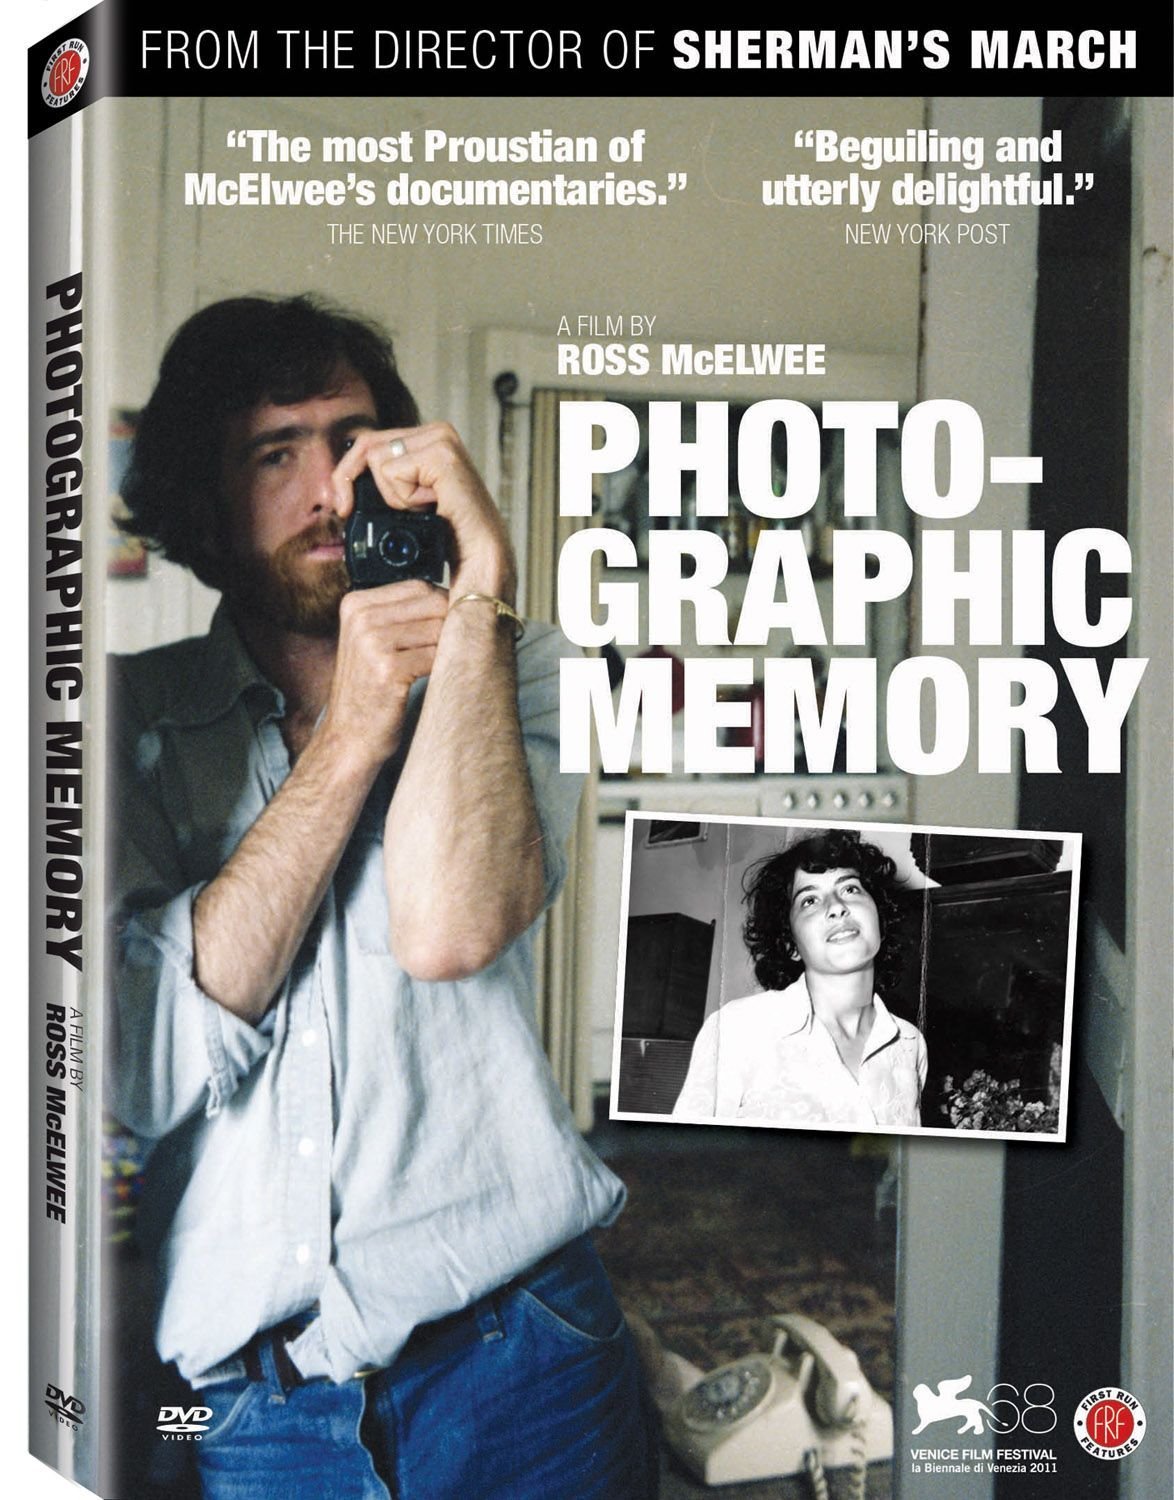 DVD Reviews: Photographic Memory